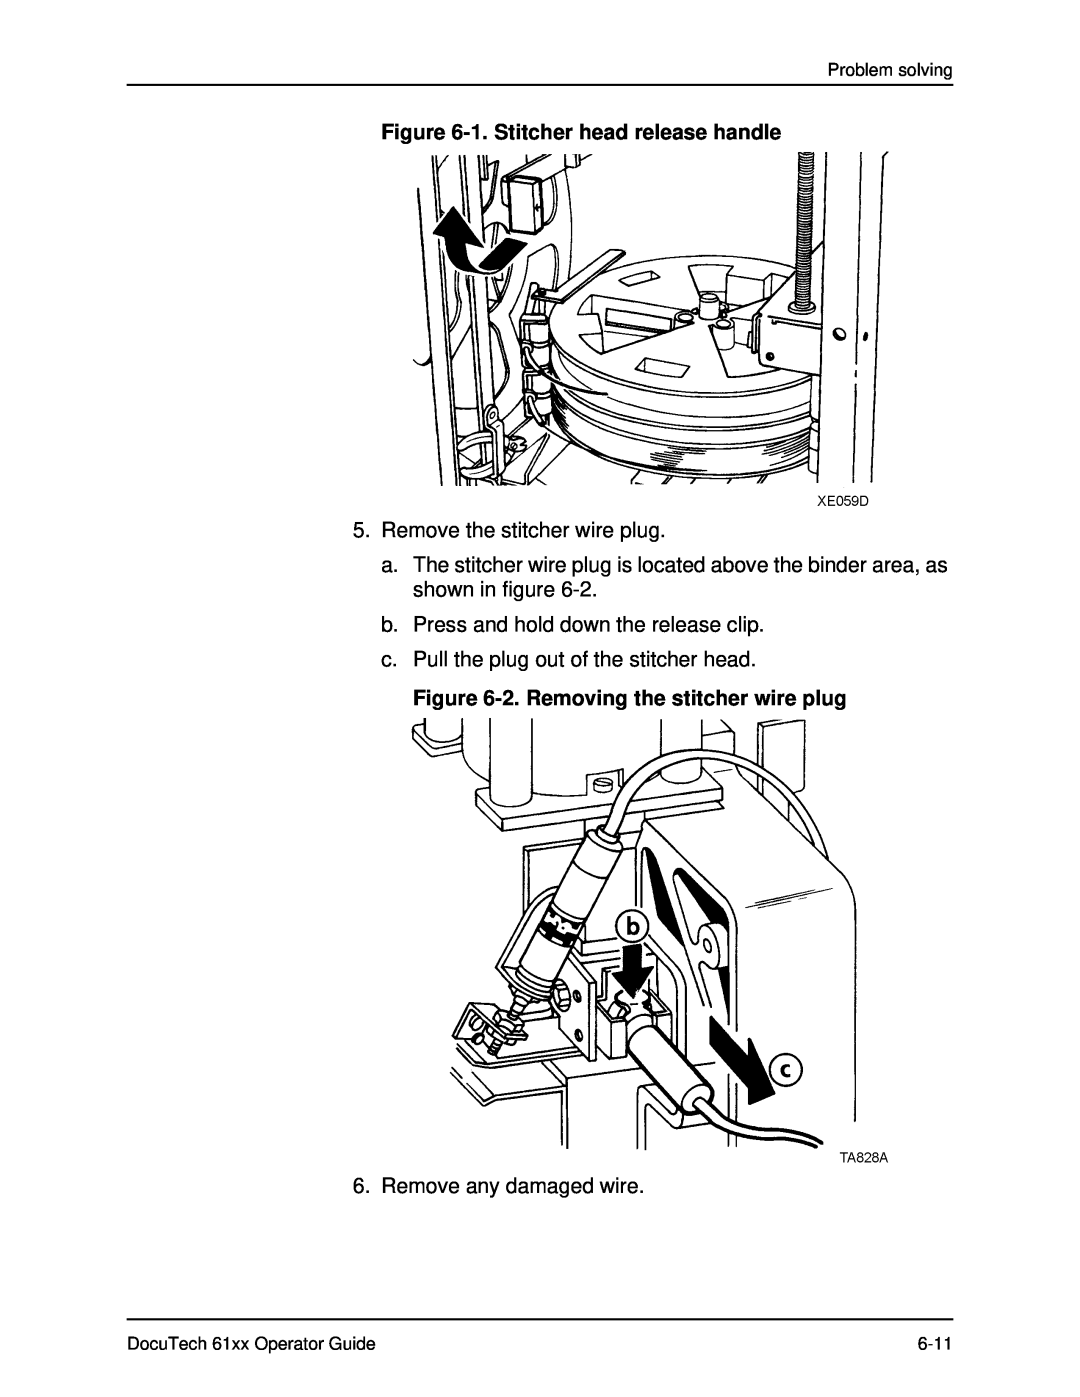 Xerox 61xx manual 1. Stitcher head release handle, 2. Removing the stitcher wire plug, Remove the stitcher wire plug 